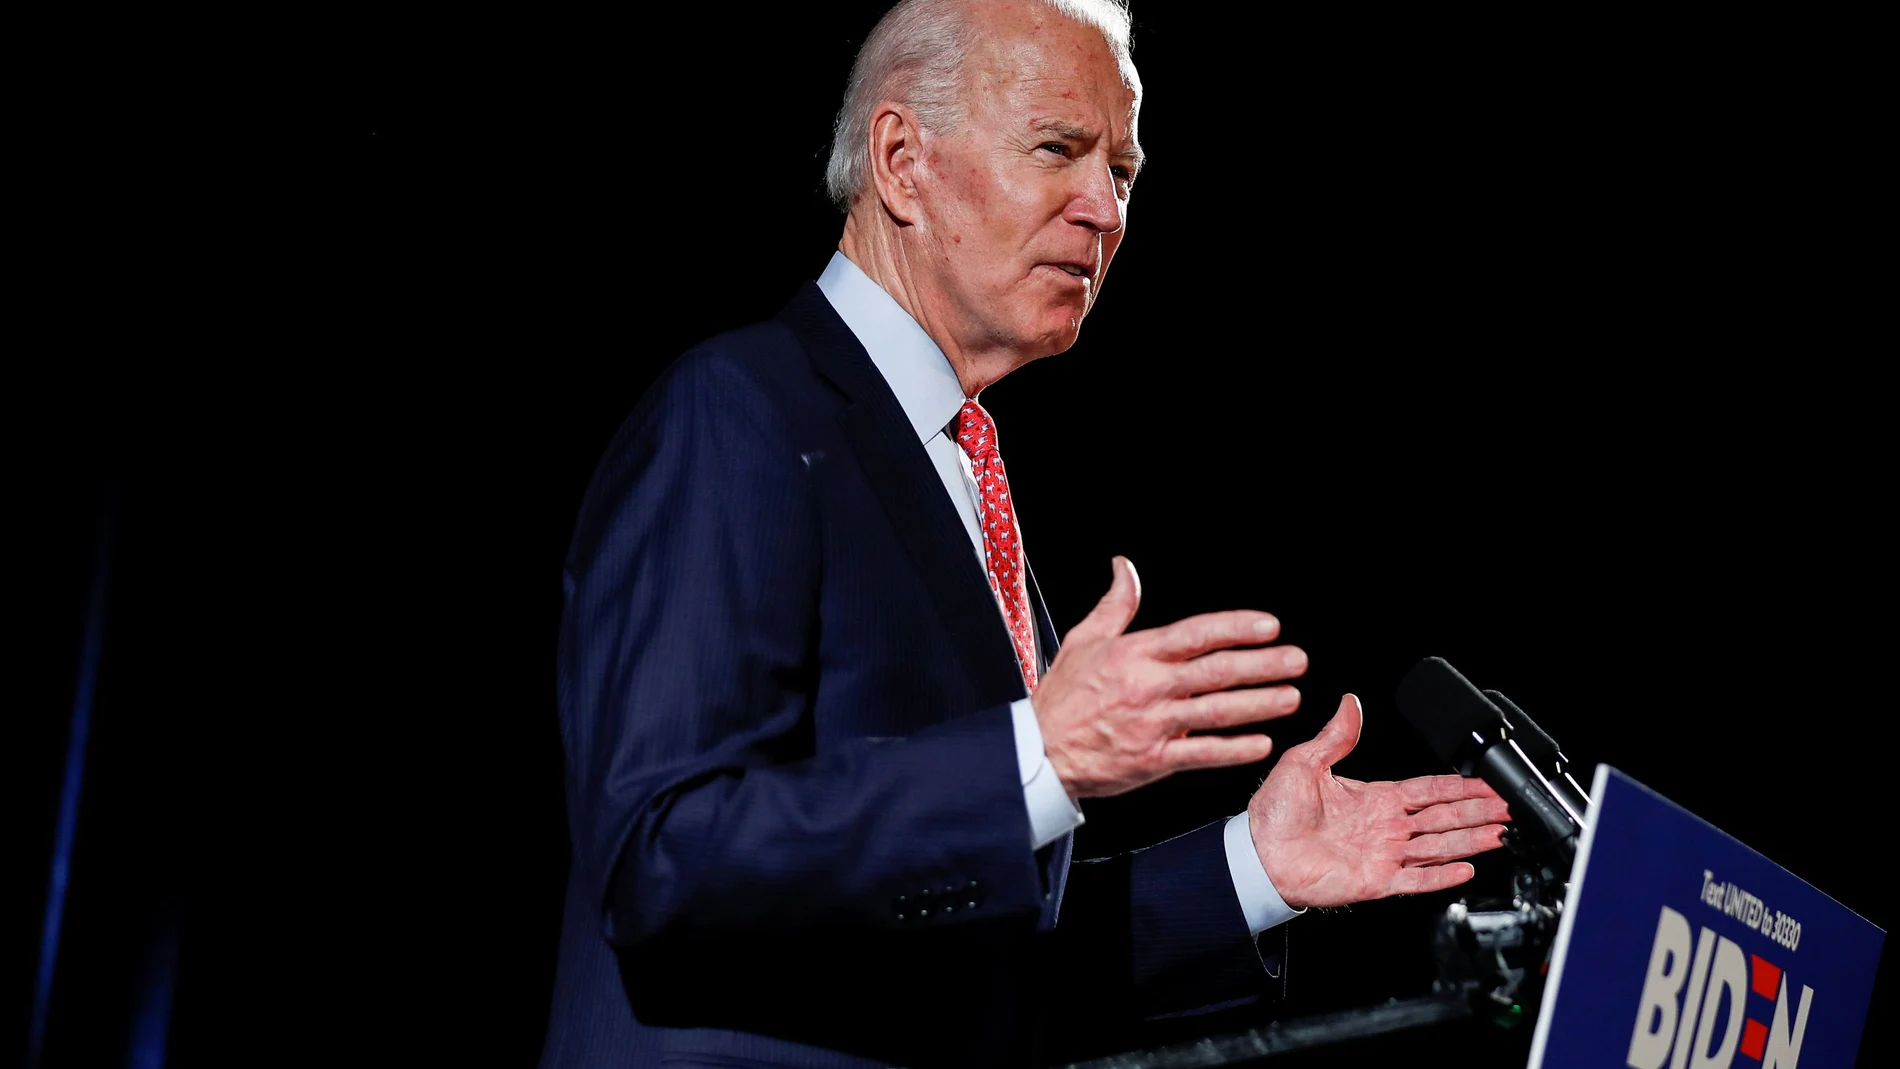 FILE PHOTO: Democratic U.S. presidential candidate Joe Biden speaks about coronavirus pandemic at event in Wilmington